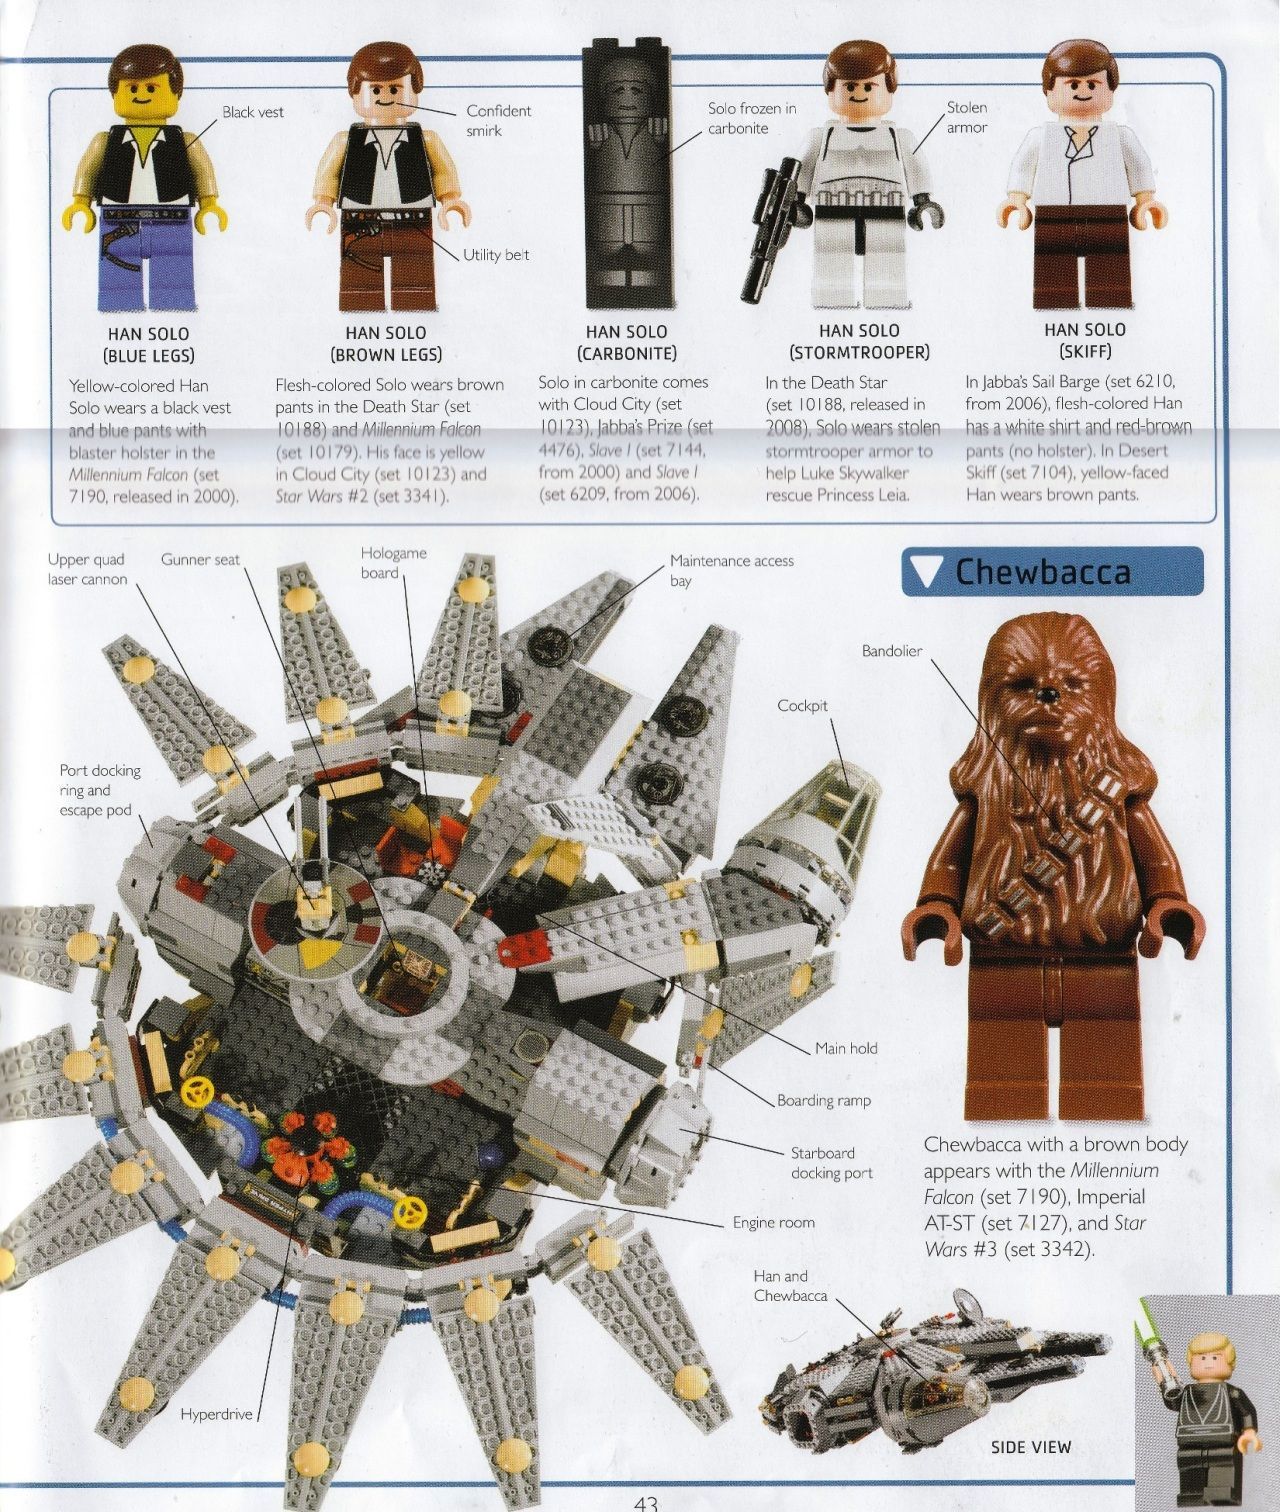 Lego Star Wars The Visual Dictionary 2009 Lego Star Wars The Visual Dictionary 2009 44